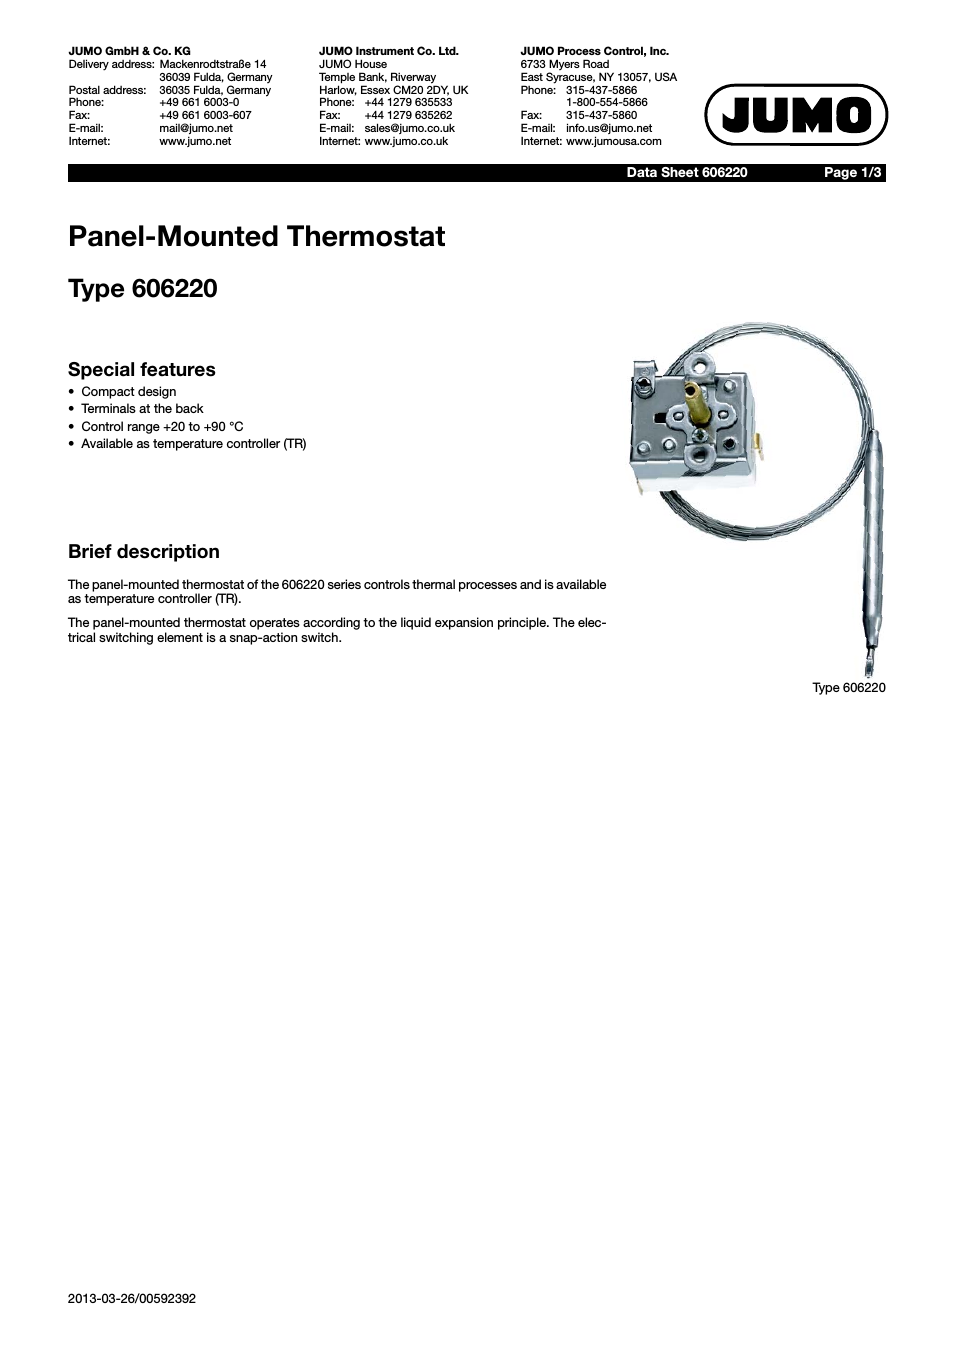 602031 Panel-Mounted Thermostat Data Sheet